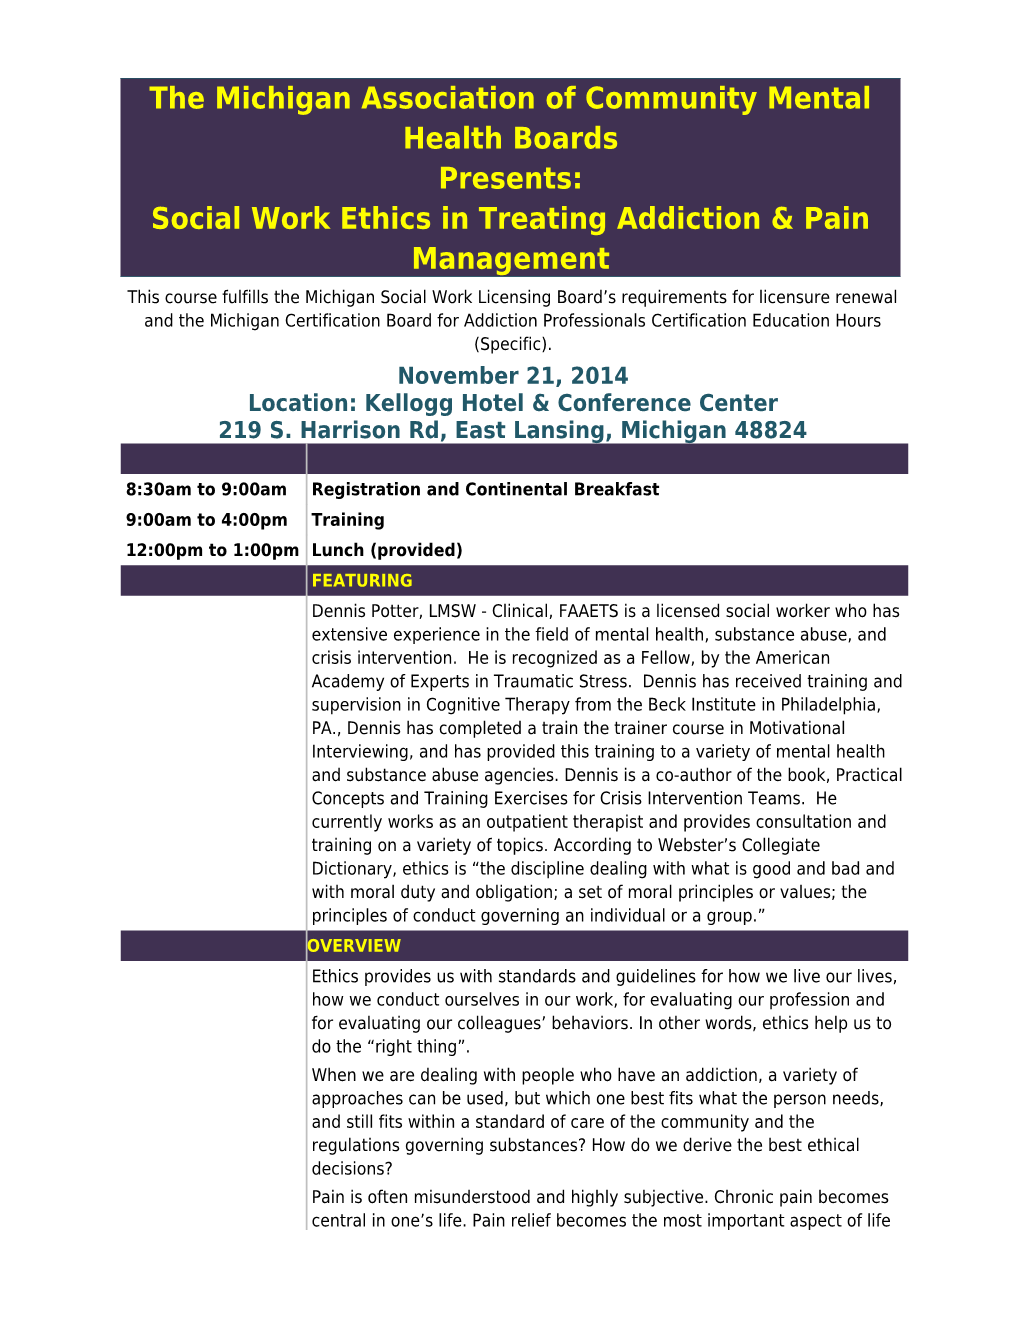 The Michigan Association of Community Mental Health Boardspresents:Social Work Ethics In s1